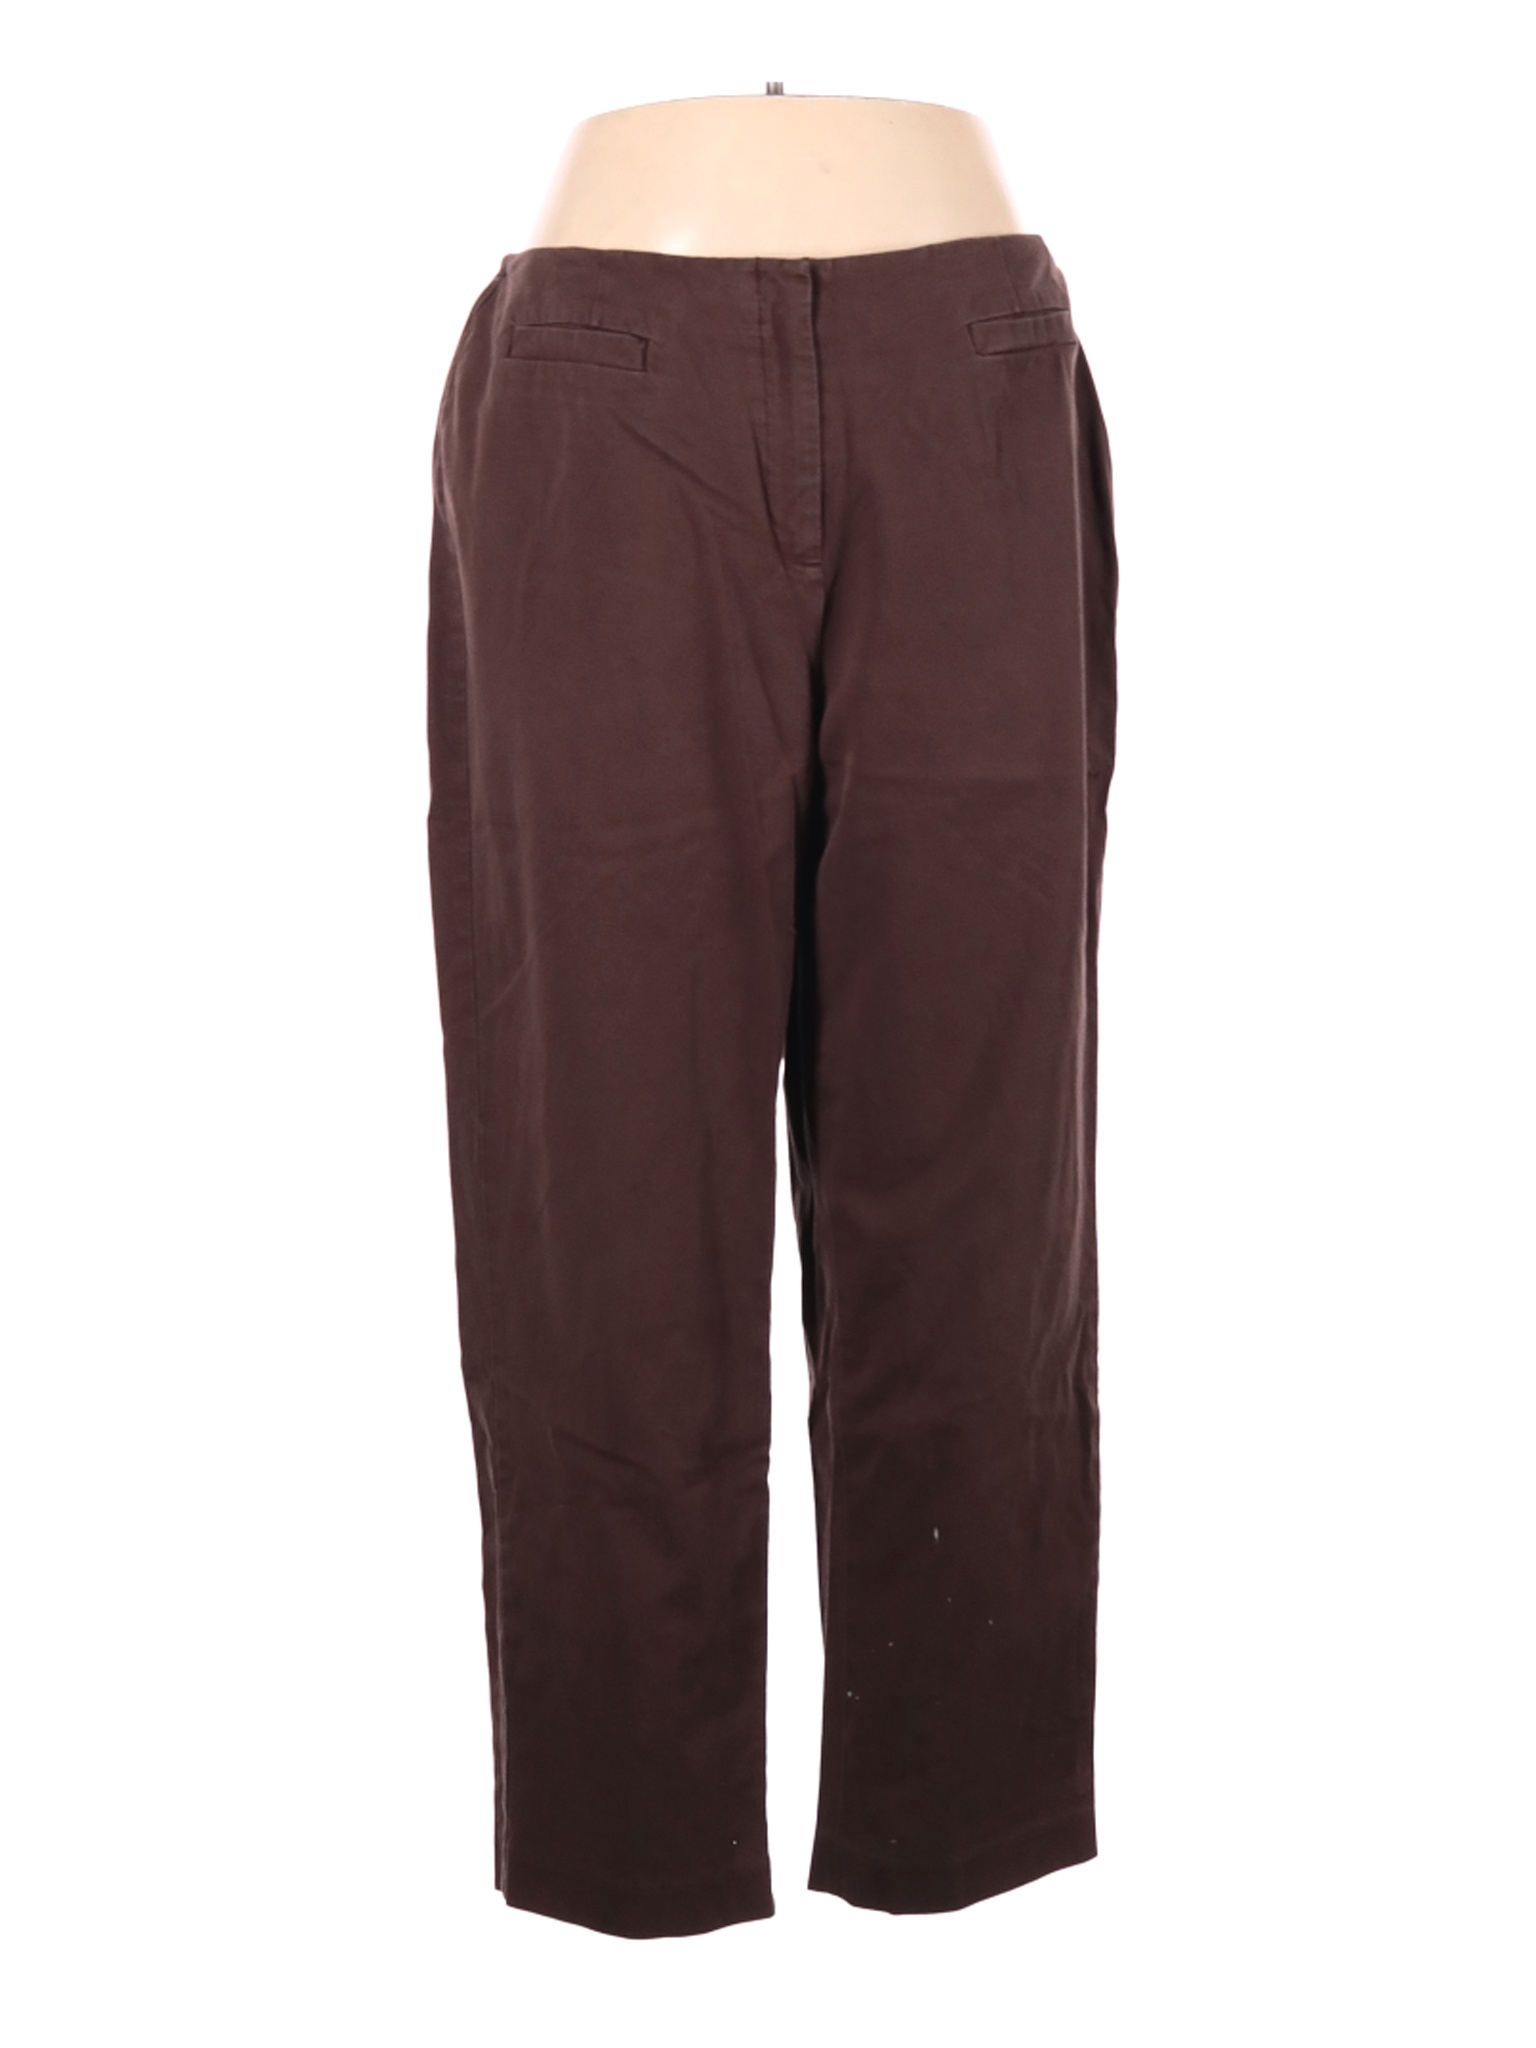 Talbots Women Brown Casual Pants 18 Plus | eBay